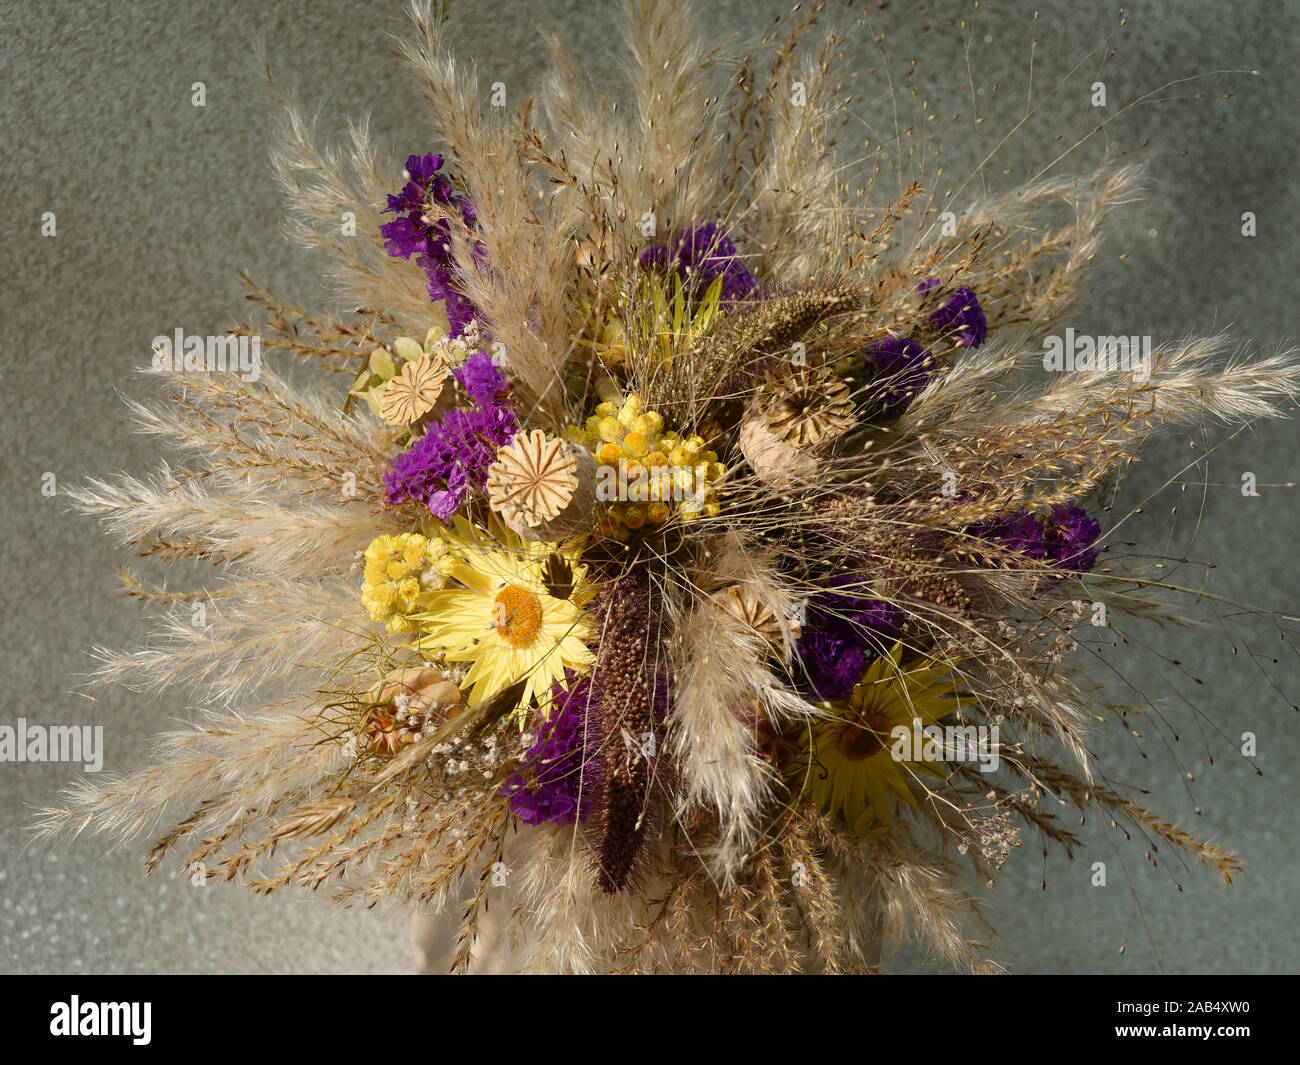 Dried flower and grass arrangement Stock Photo